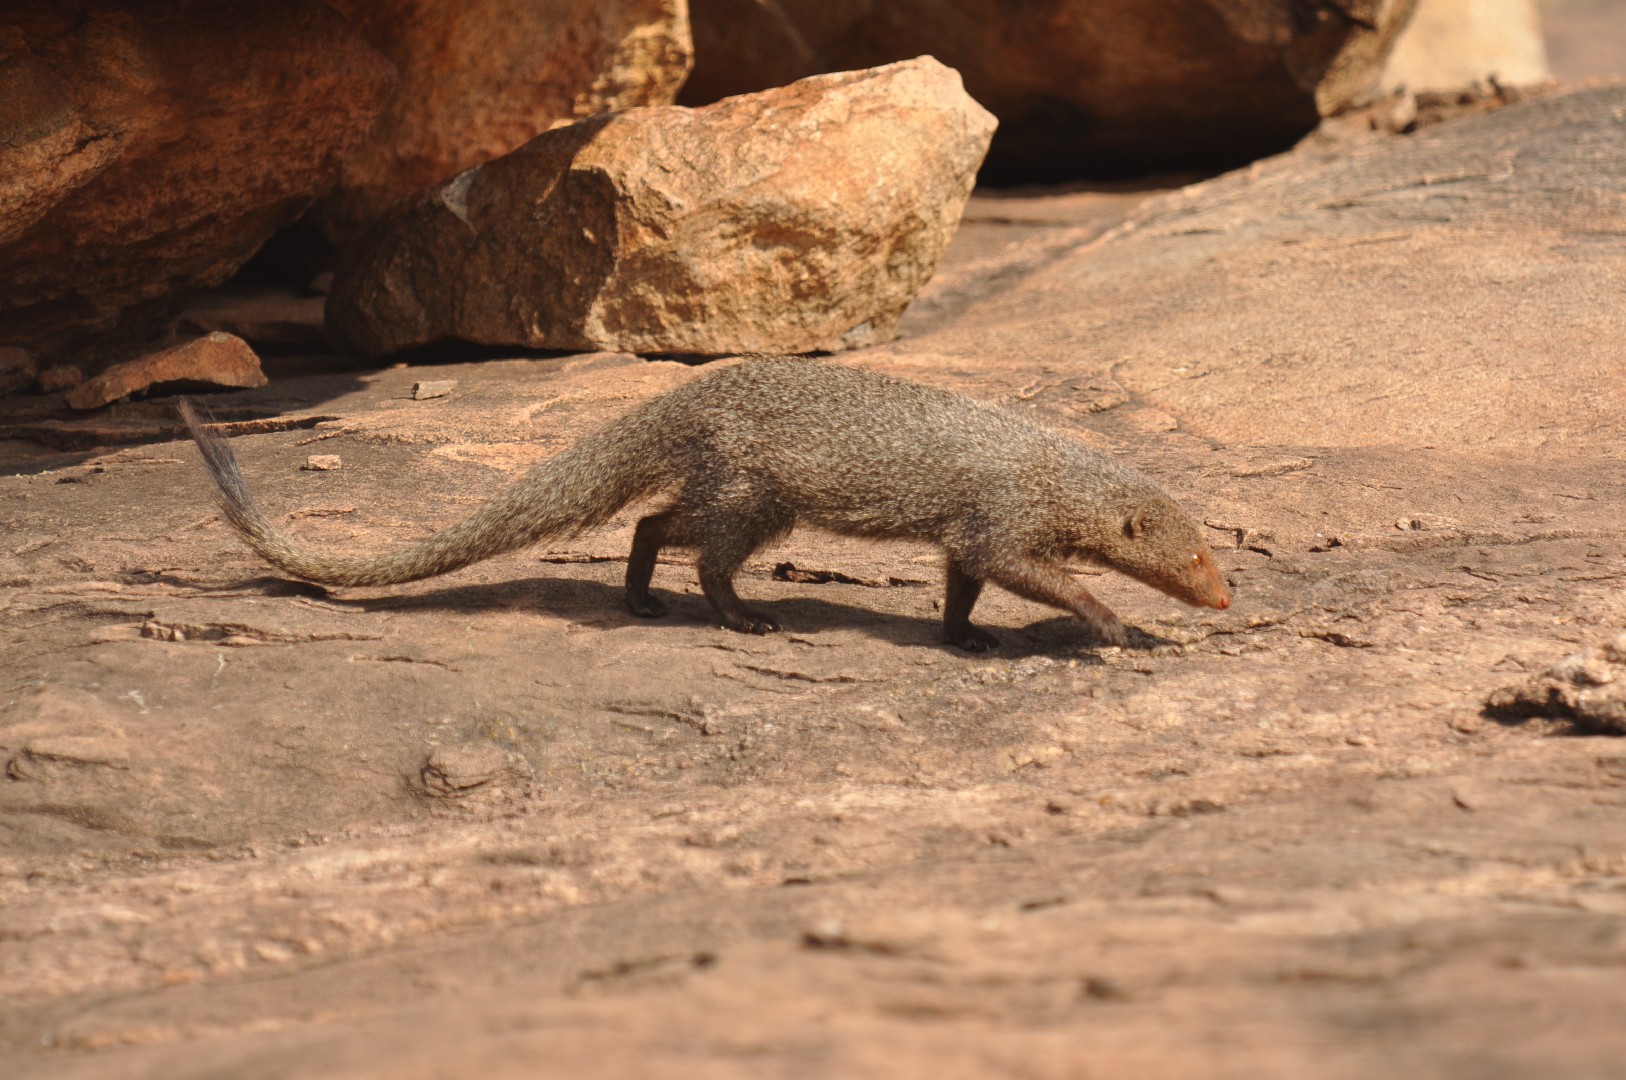 Common mongooses (Herpestes)